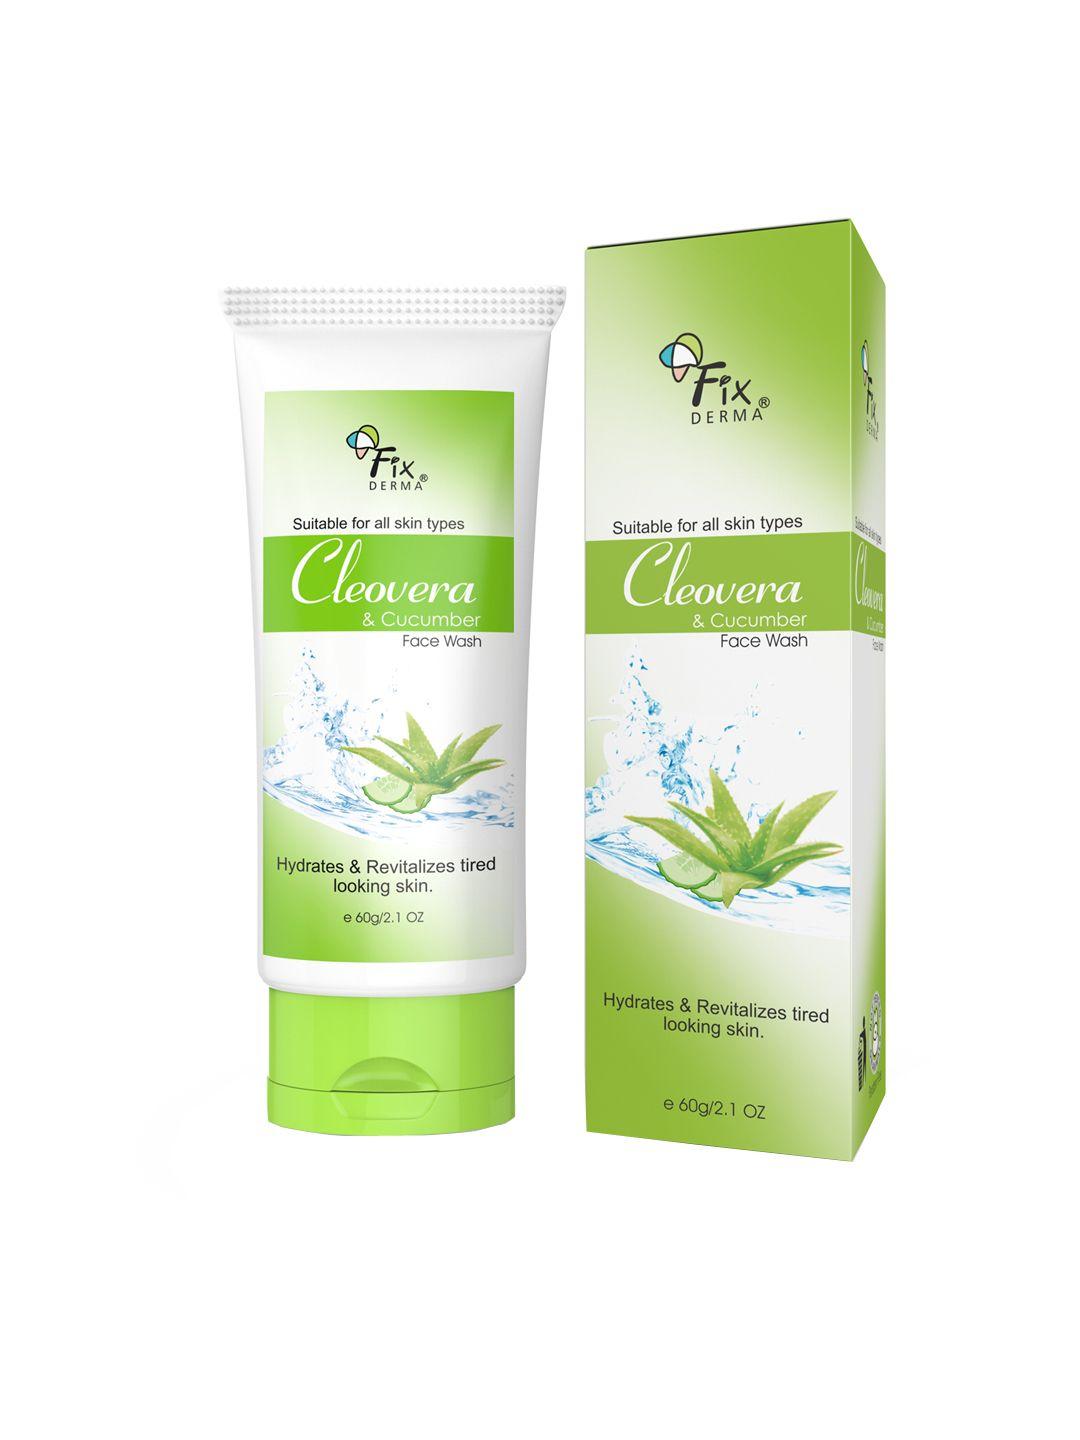 fixderma cleovera & cucumber facewash with aloe vera - 60g